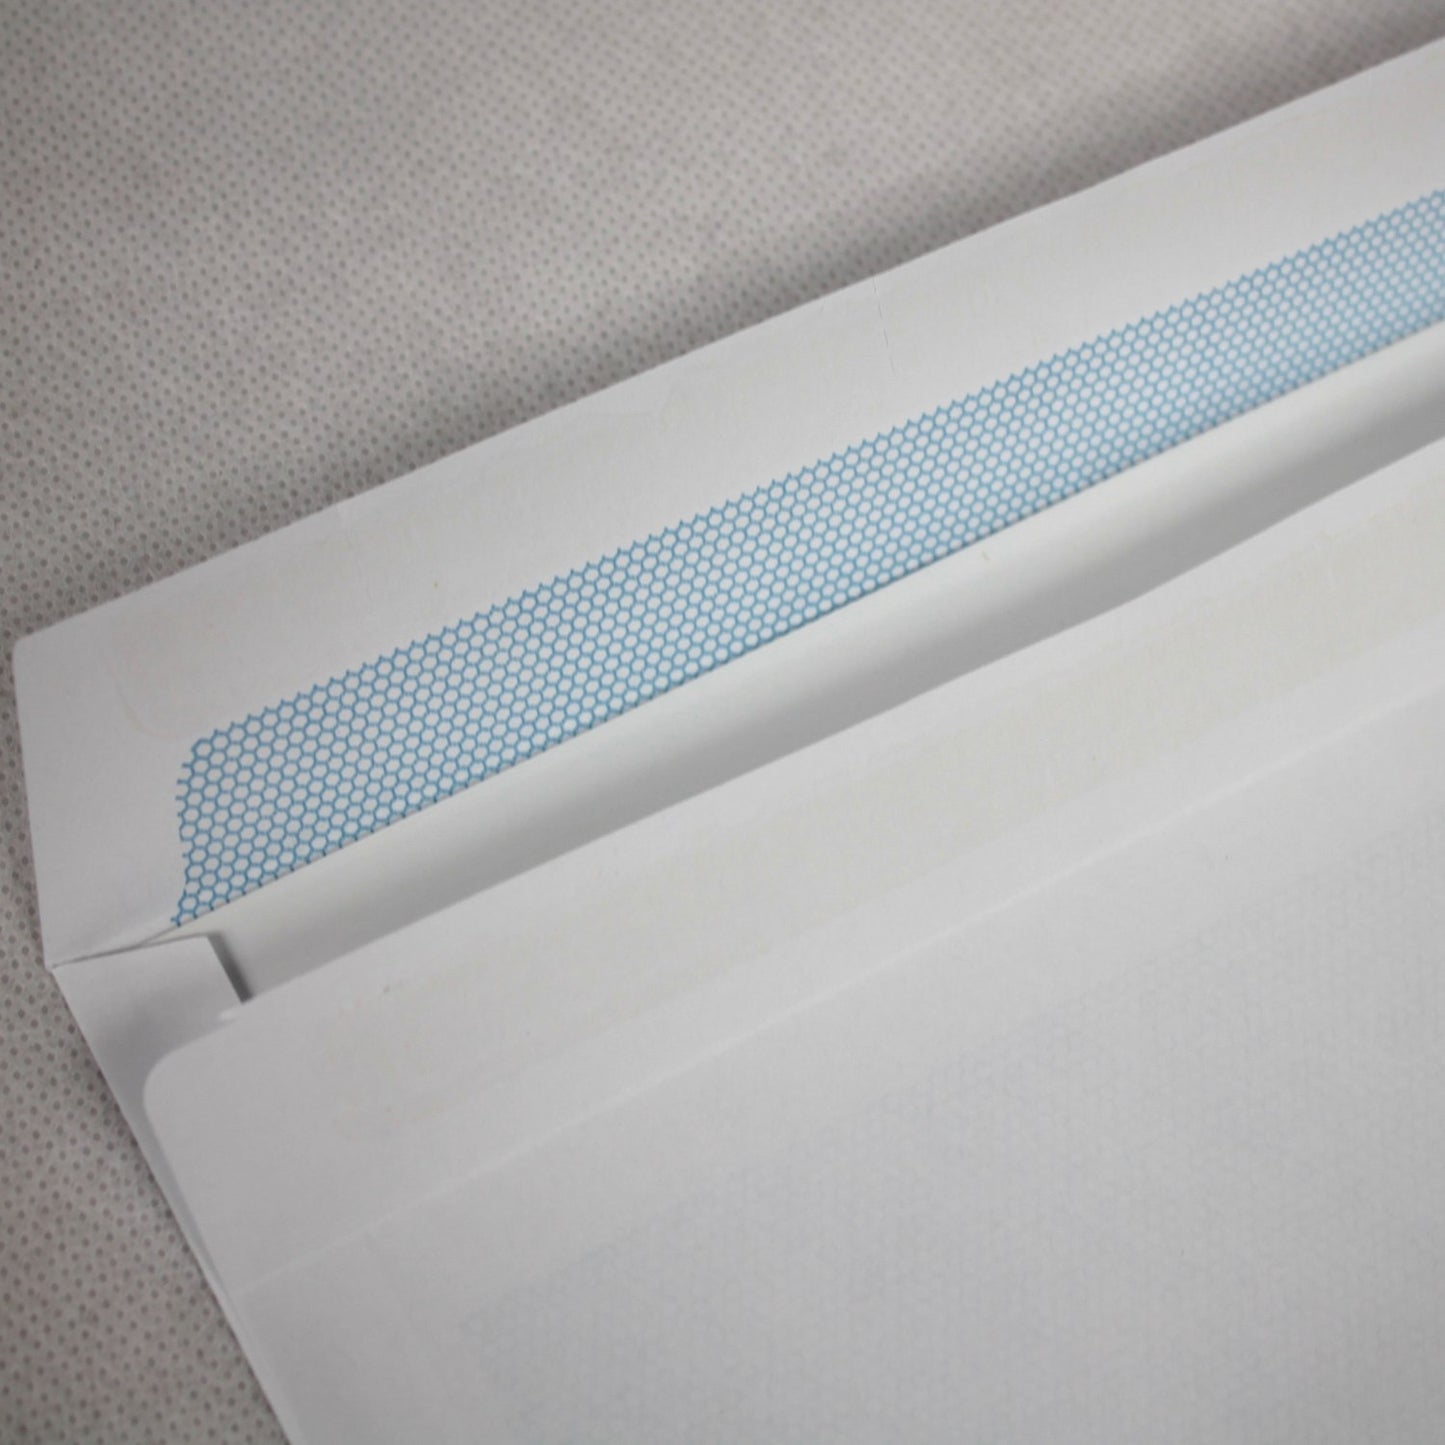 162x229mm C5 White Self Seal Envelopes (Window 45x90mm)